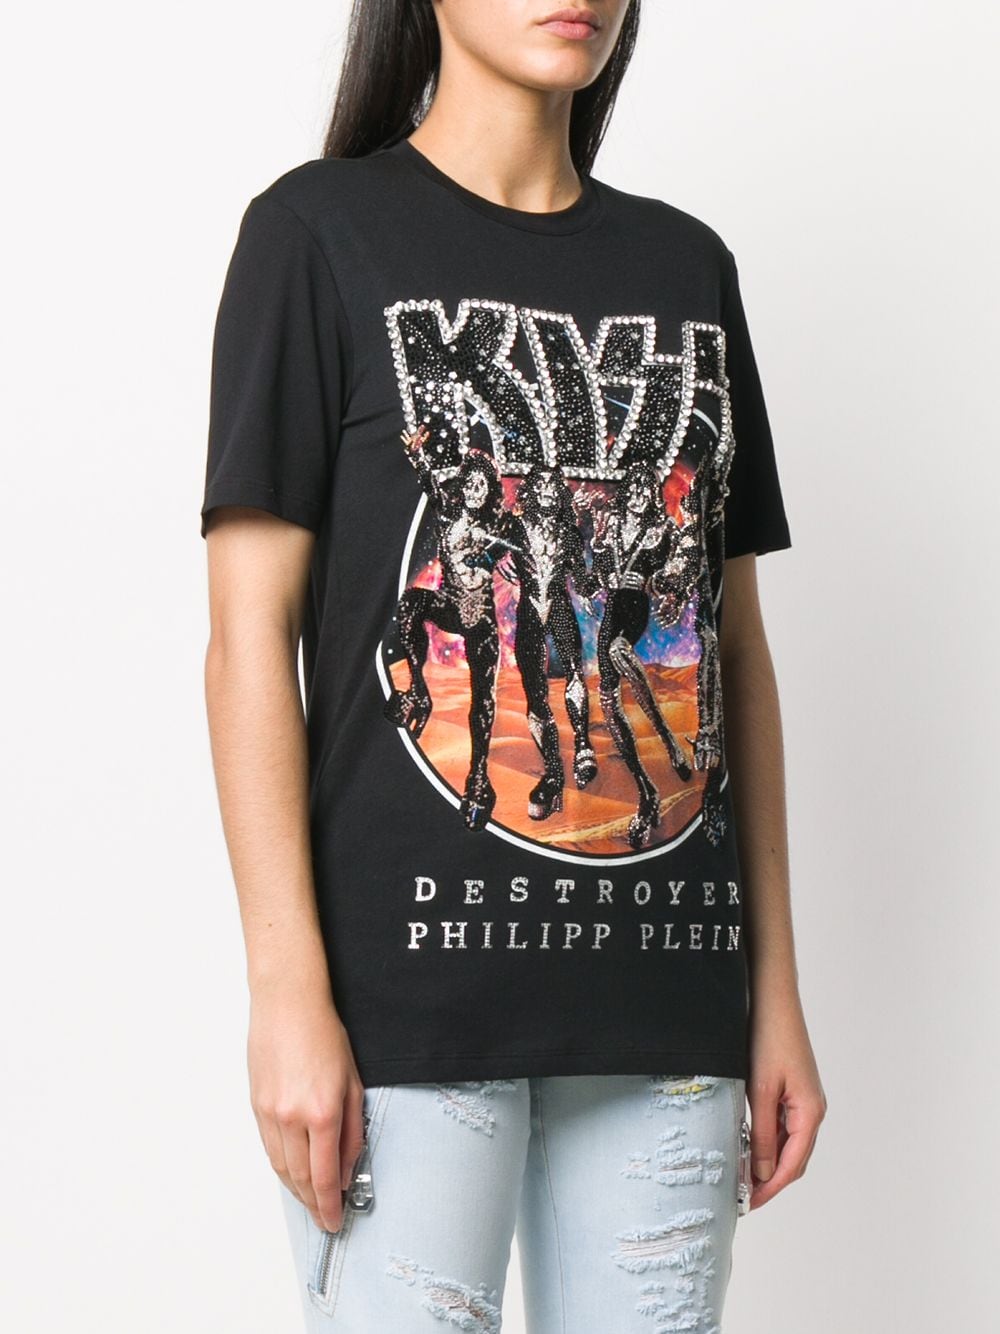 ingewikkeld smog Overleving Philipp Plein X Kiss Destroyer T-shirt - Farfetch